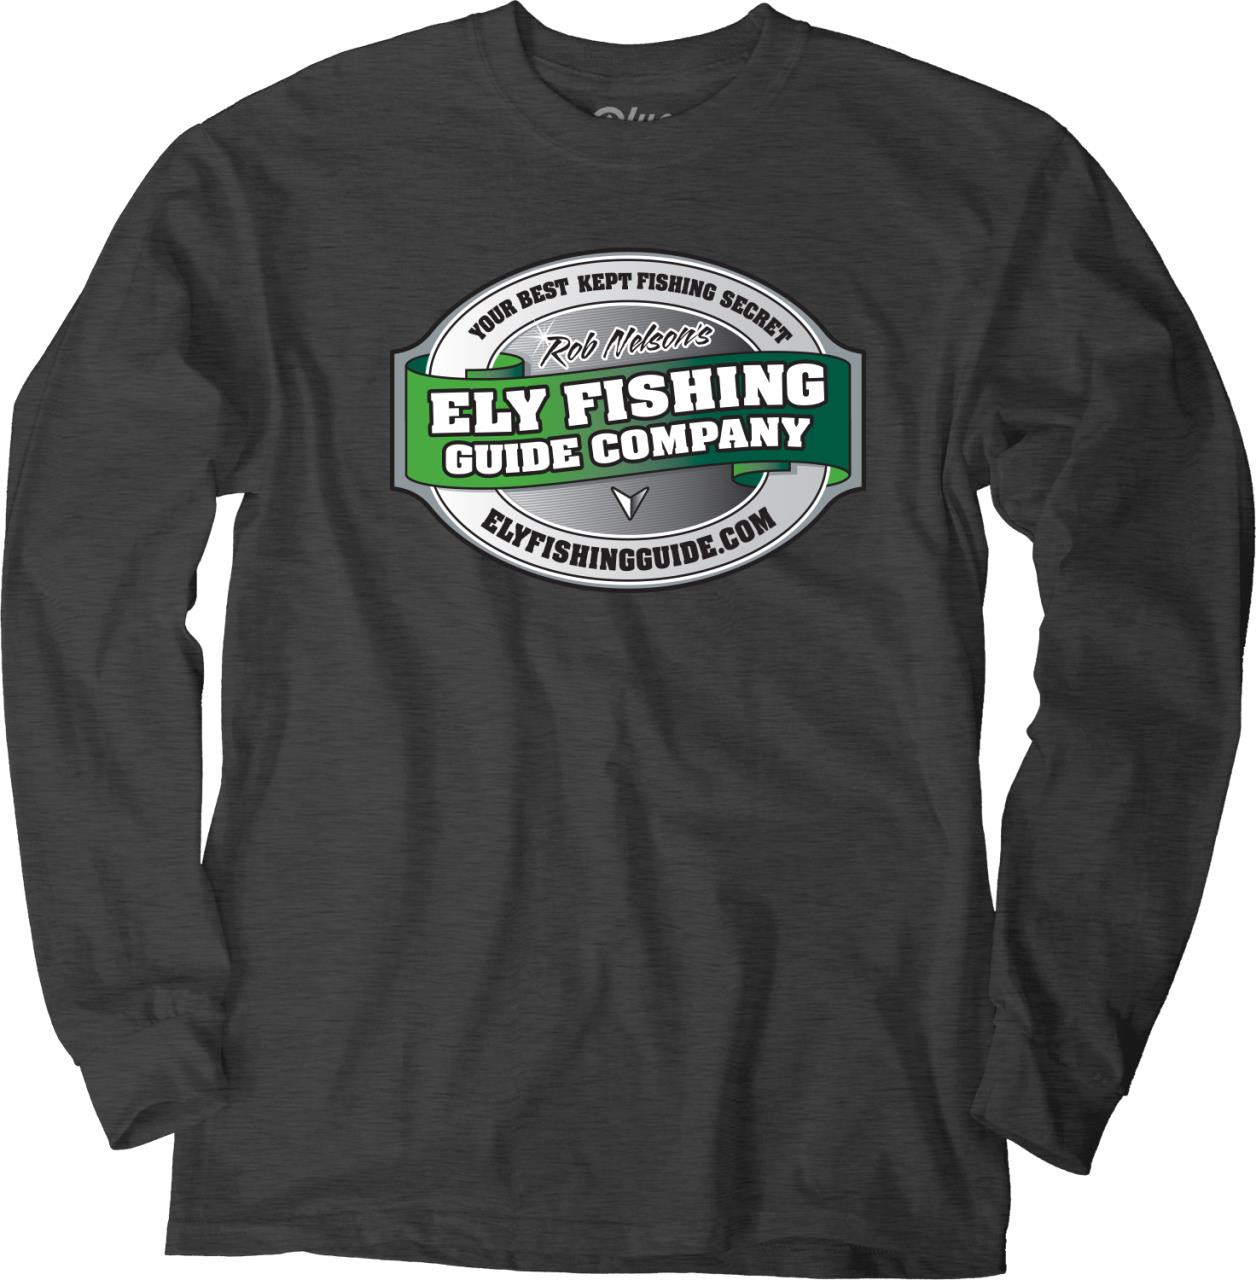 Ely Fishing Guide Company Long Sleeve T-shirt